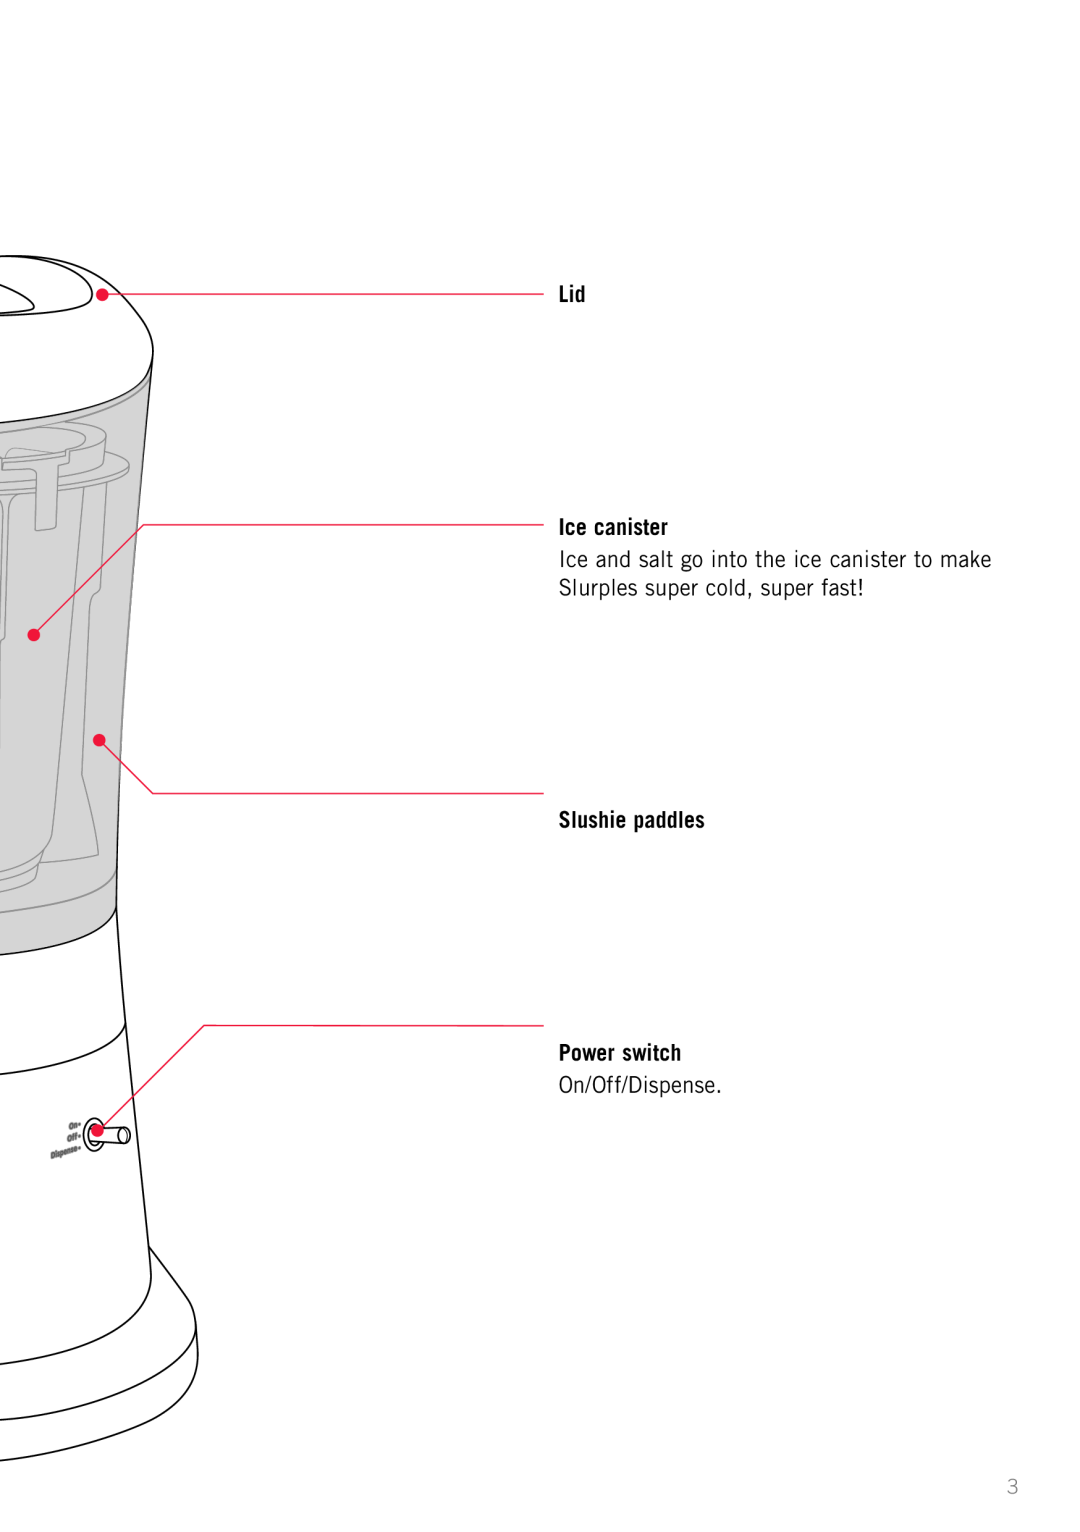 Sunbeam SL4600 manual Lid Ice canister, Slushie paddles Power switch, On/Off/Dispense 